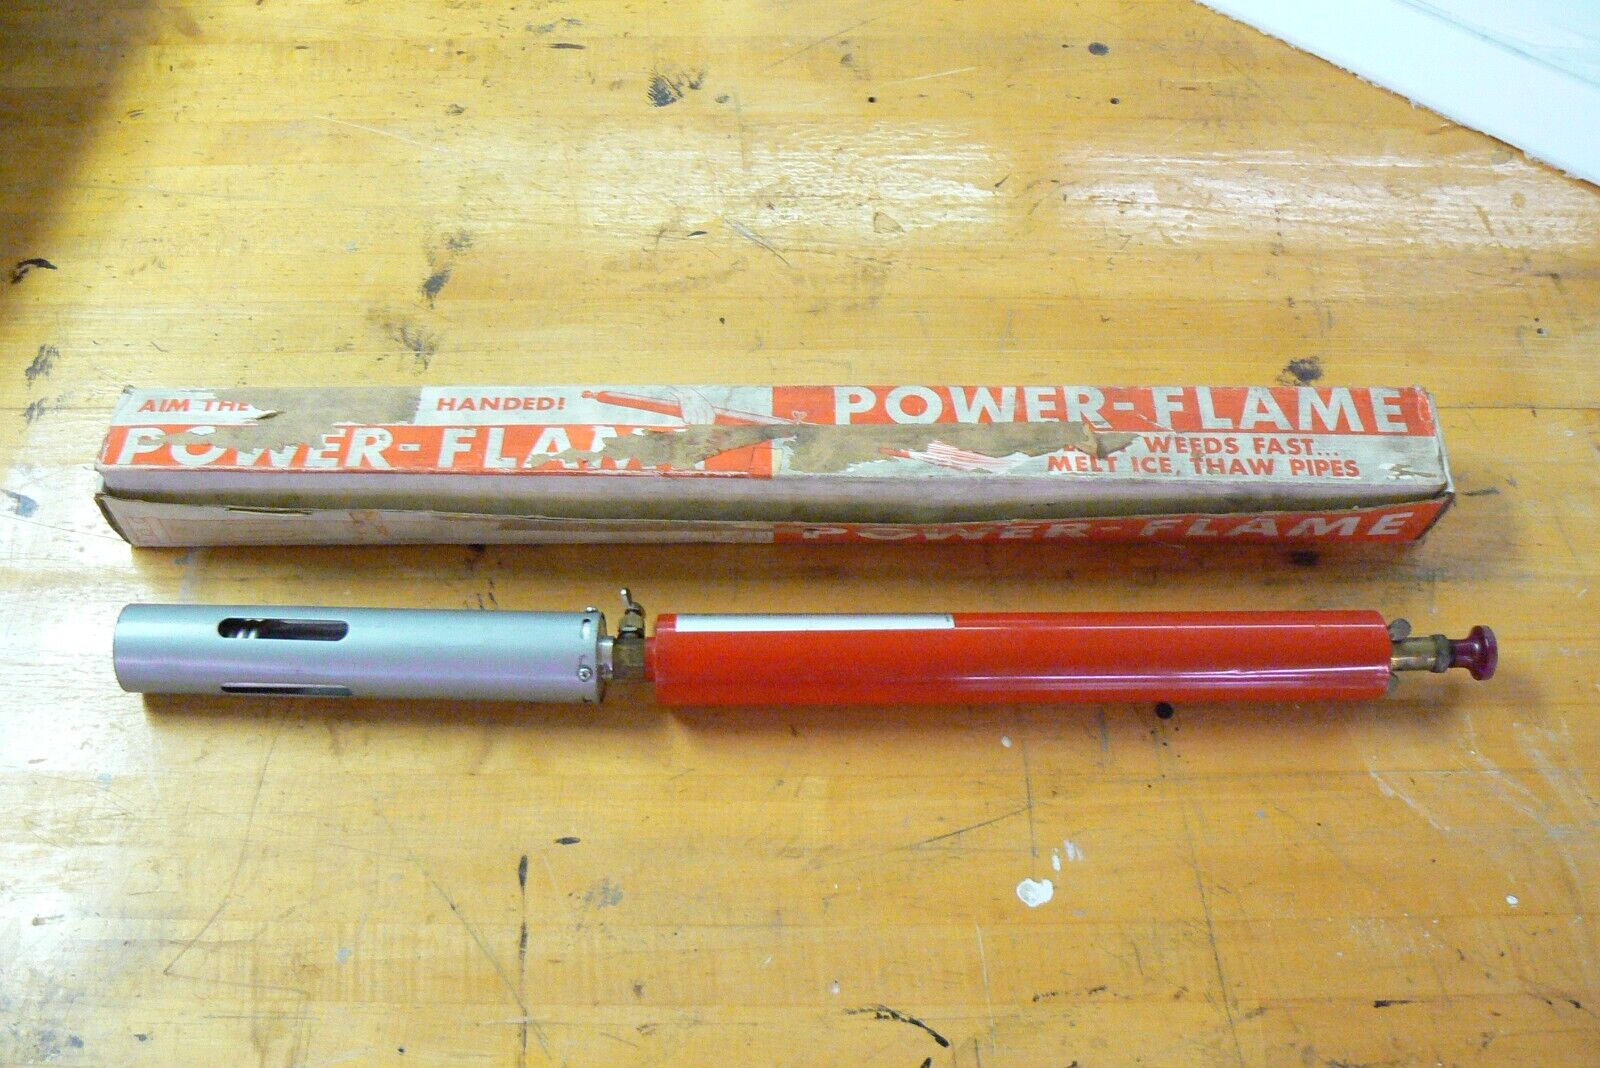 Vintage NOS Power-Flame Hand Held Kerosene Torch by Bandwagon Inc.